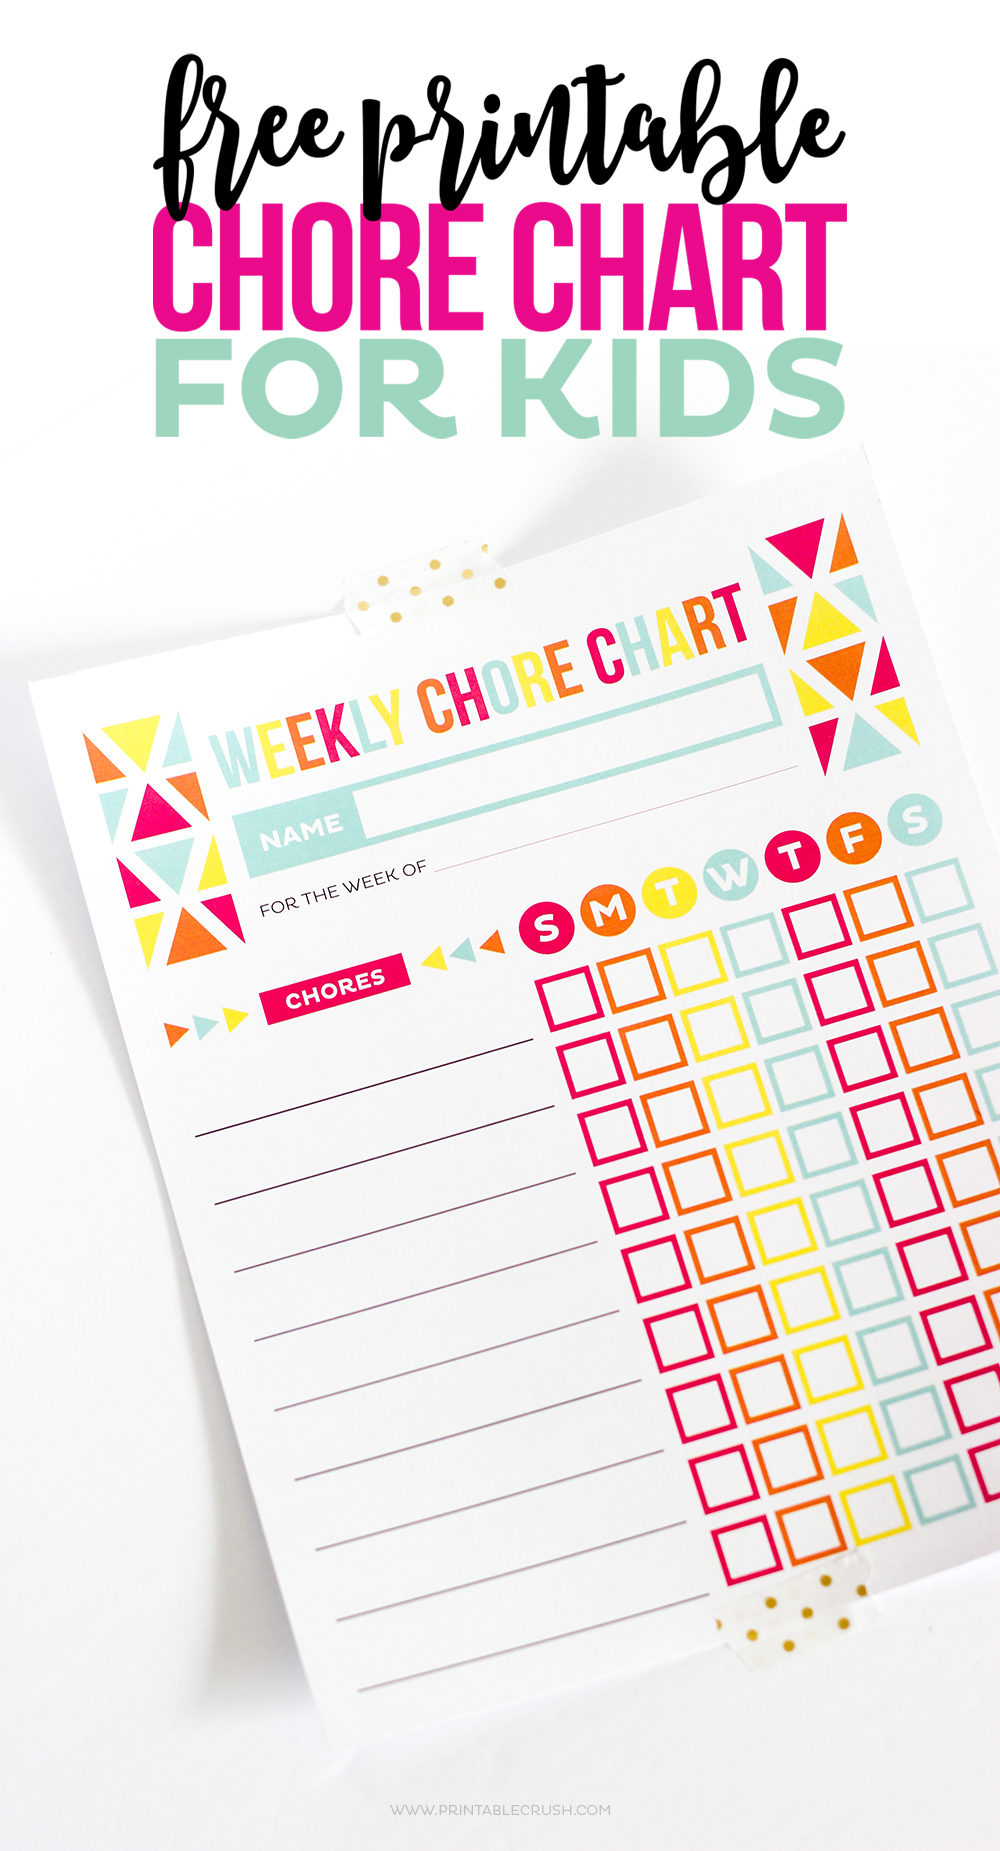 FREE Printable Chore Chart for Kids - Printable Crush